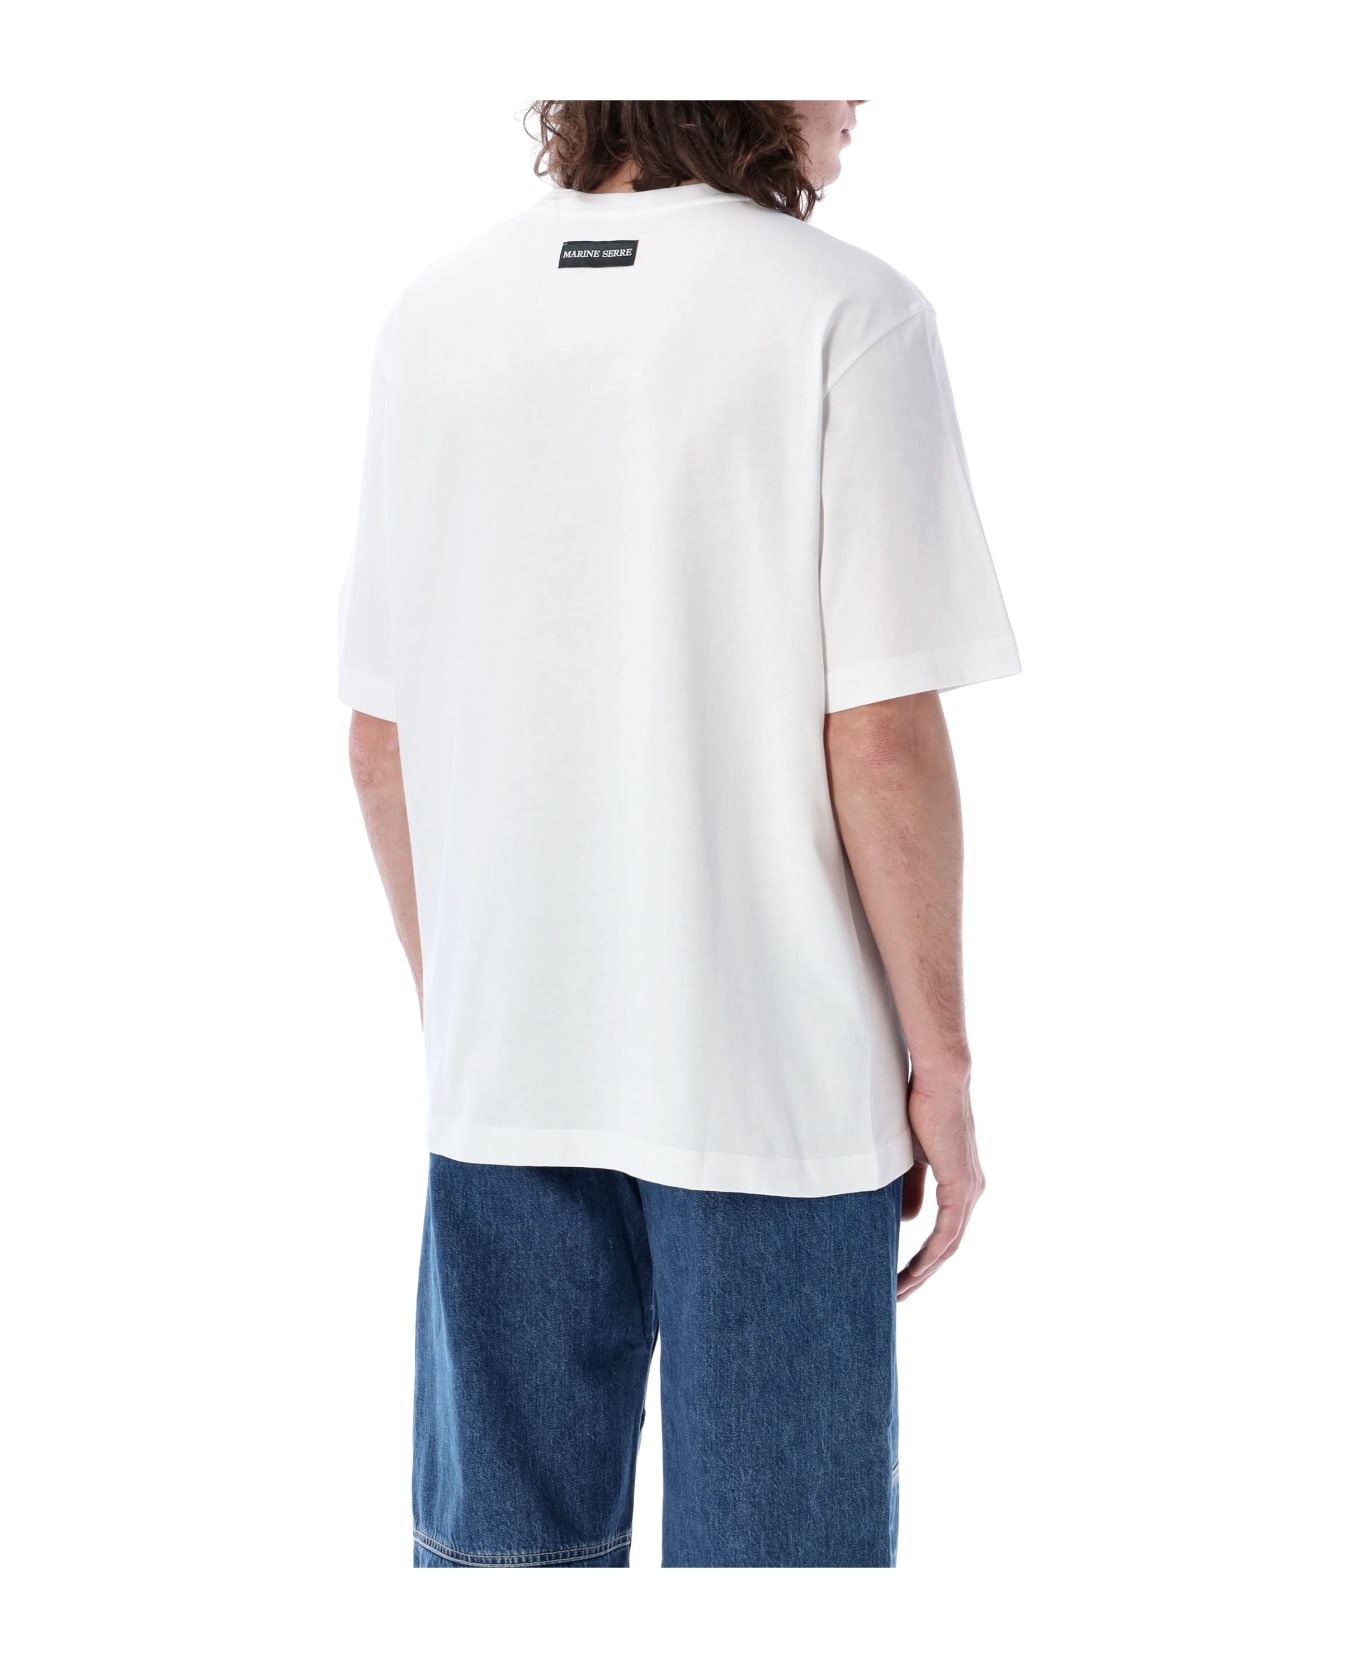 Marine Serre Organic Cotton Jersey Plain T-shirt - White シャツ